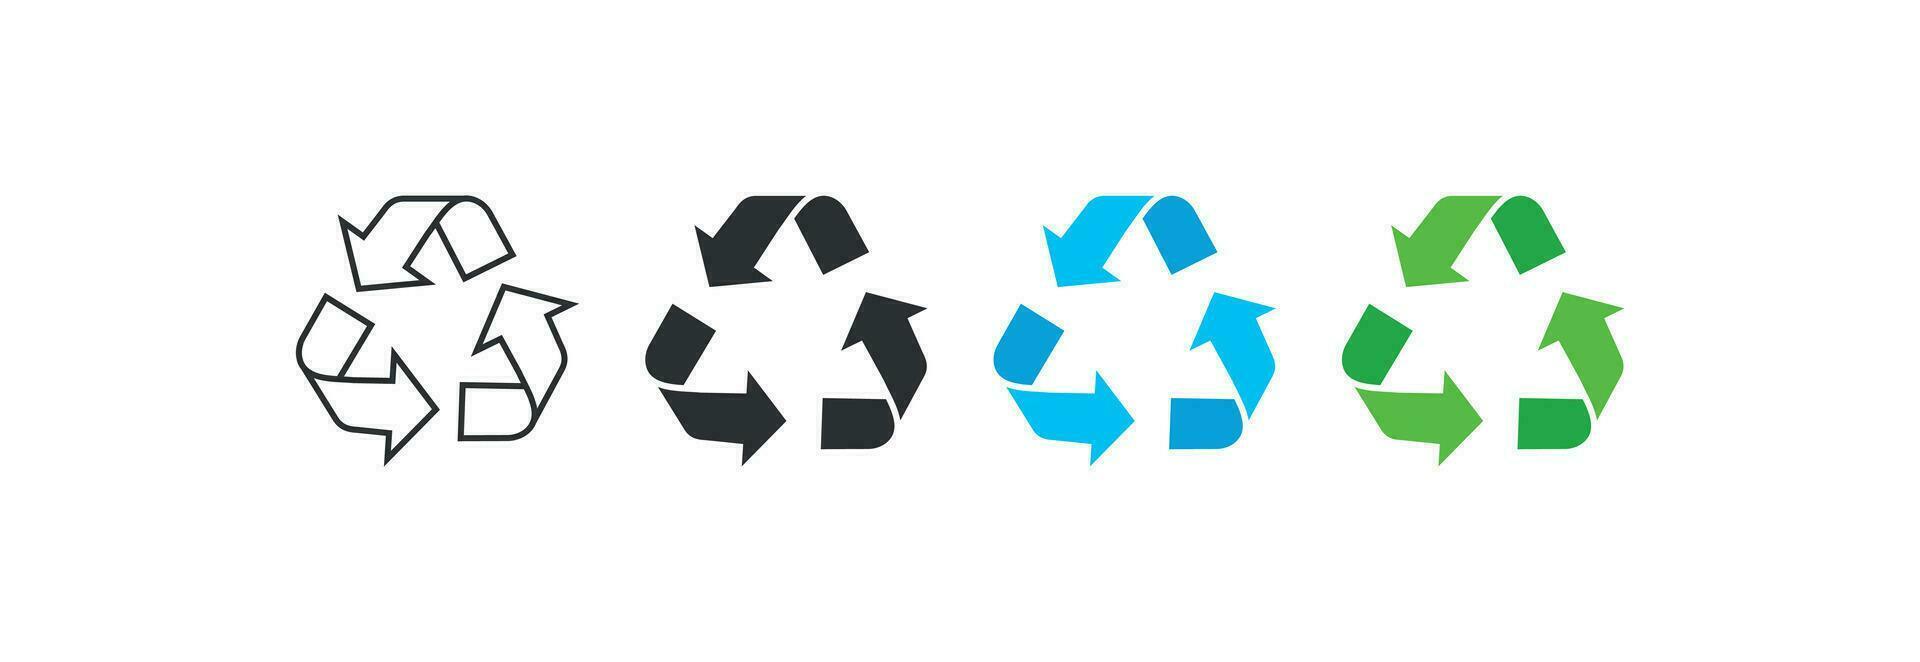 Recycling logo icon set. Recycle arrow vector